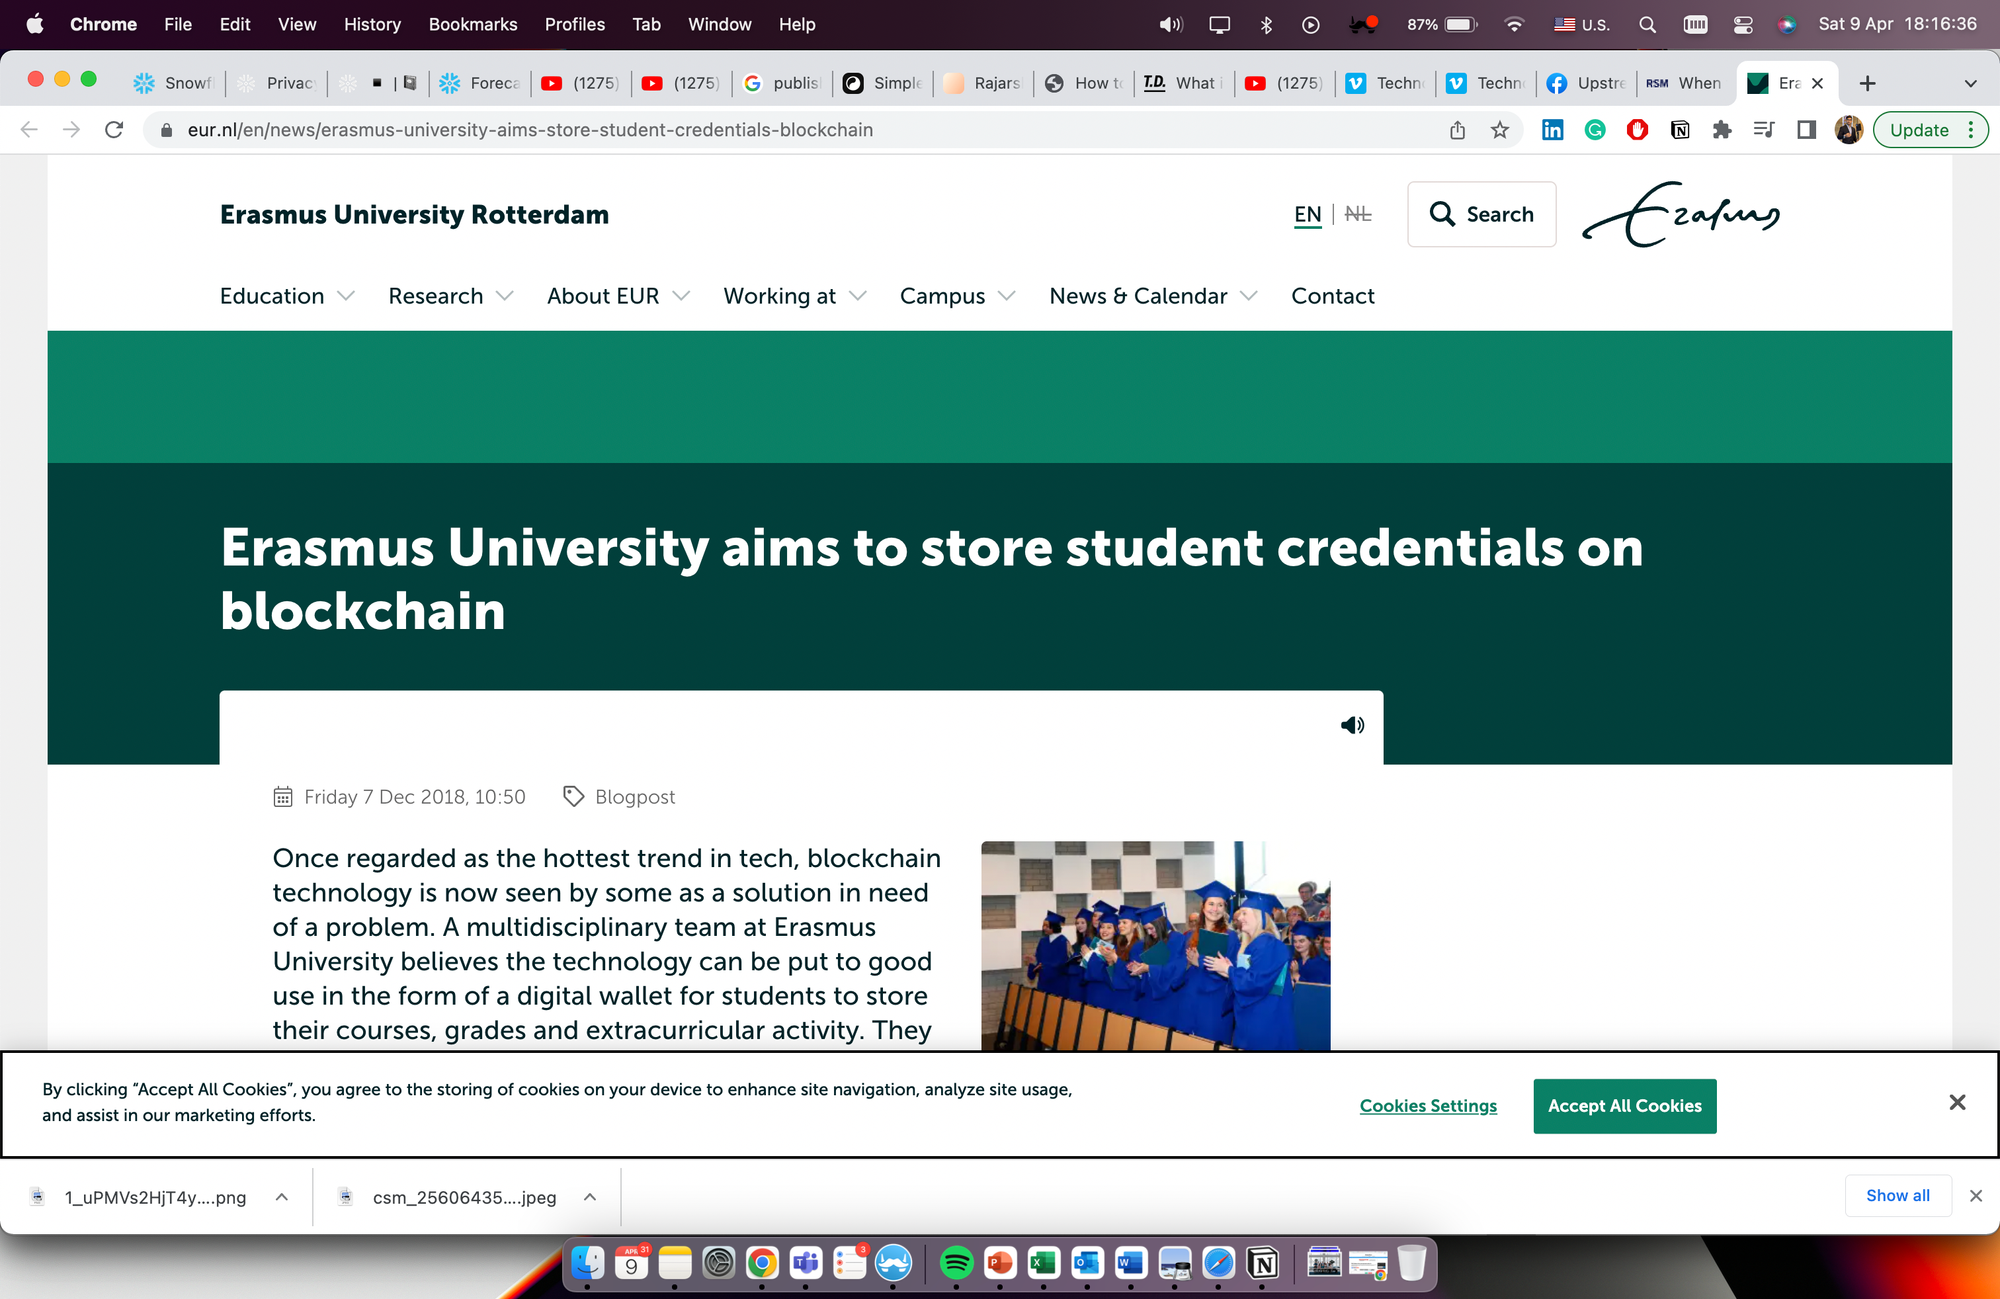 Erasmus University aims to store student credentials on blockchain